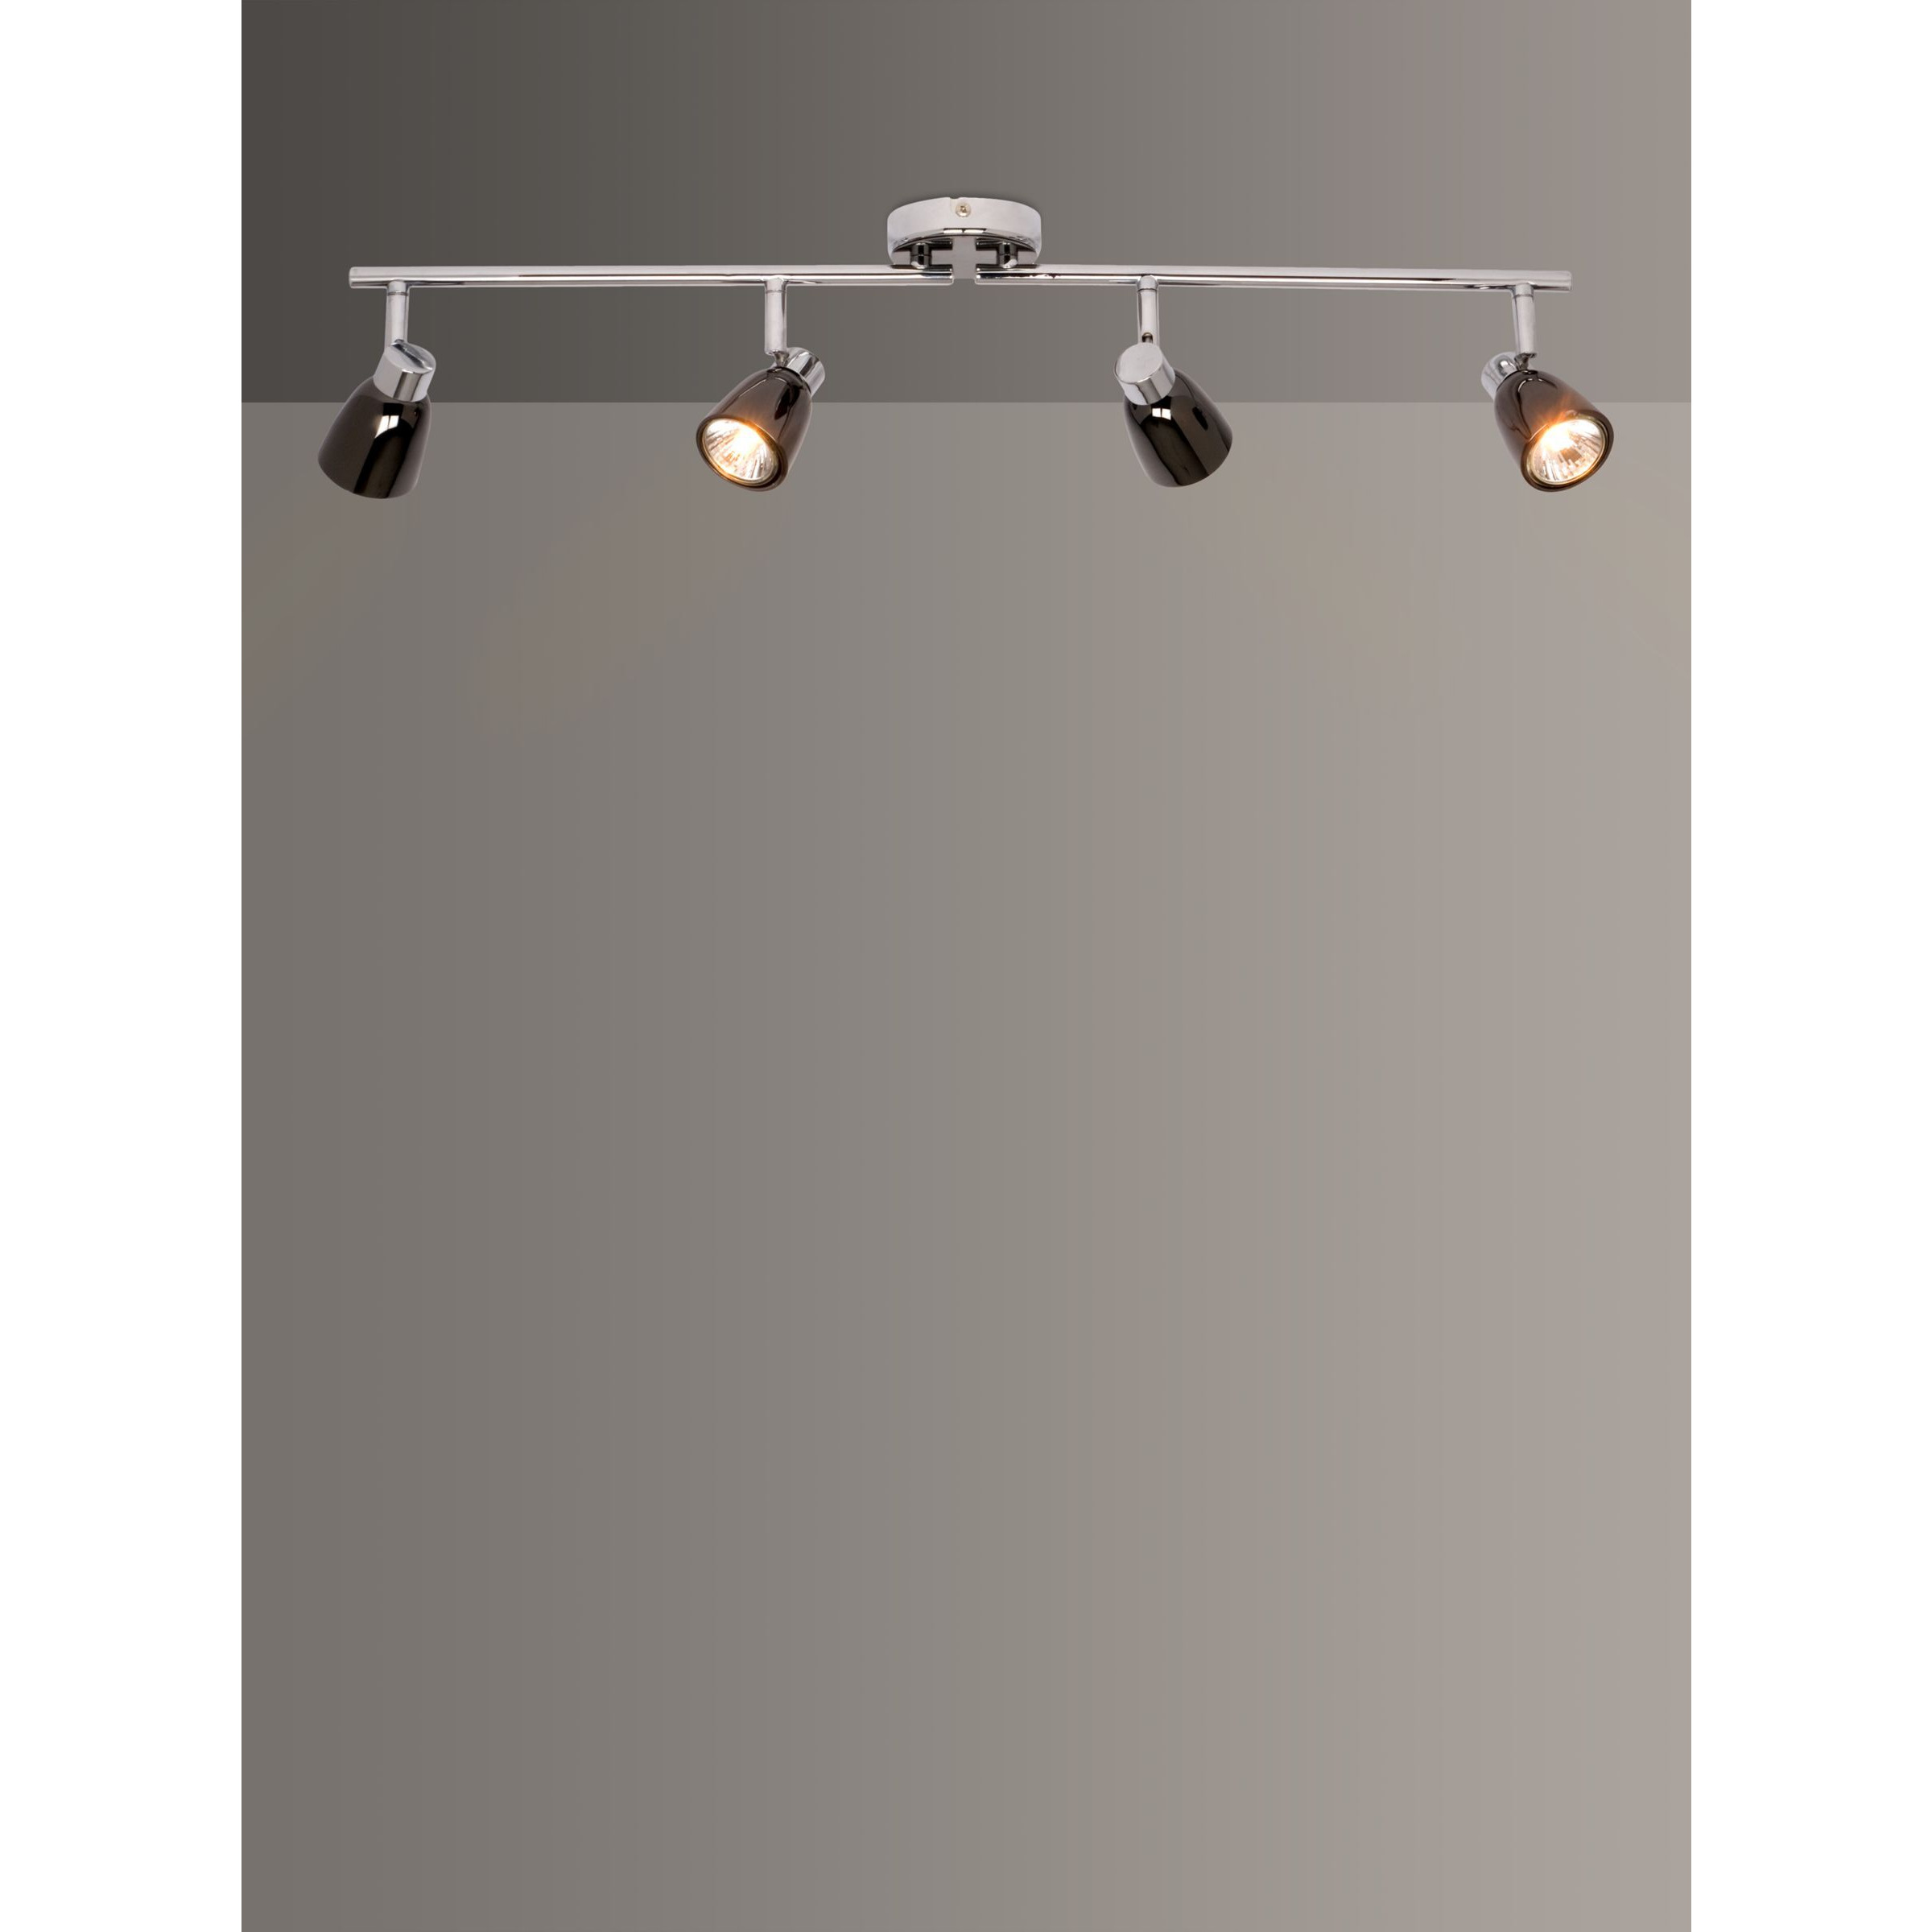 John Lewis Fenix GU10 LED 4 Spotlight Ceiling Bar, Black Pearl Nickel - image 1